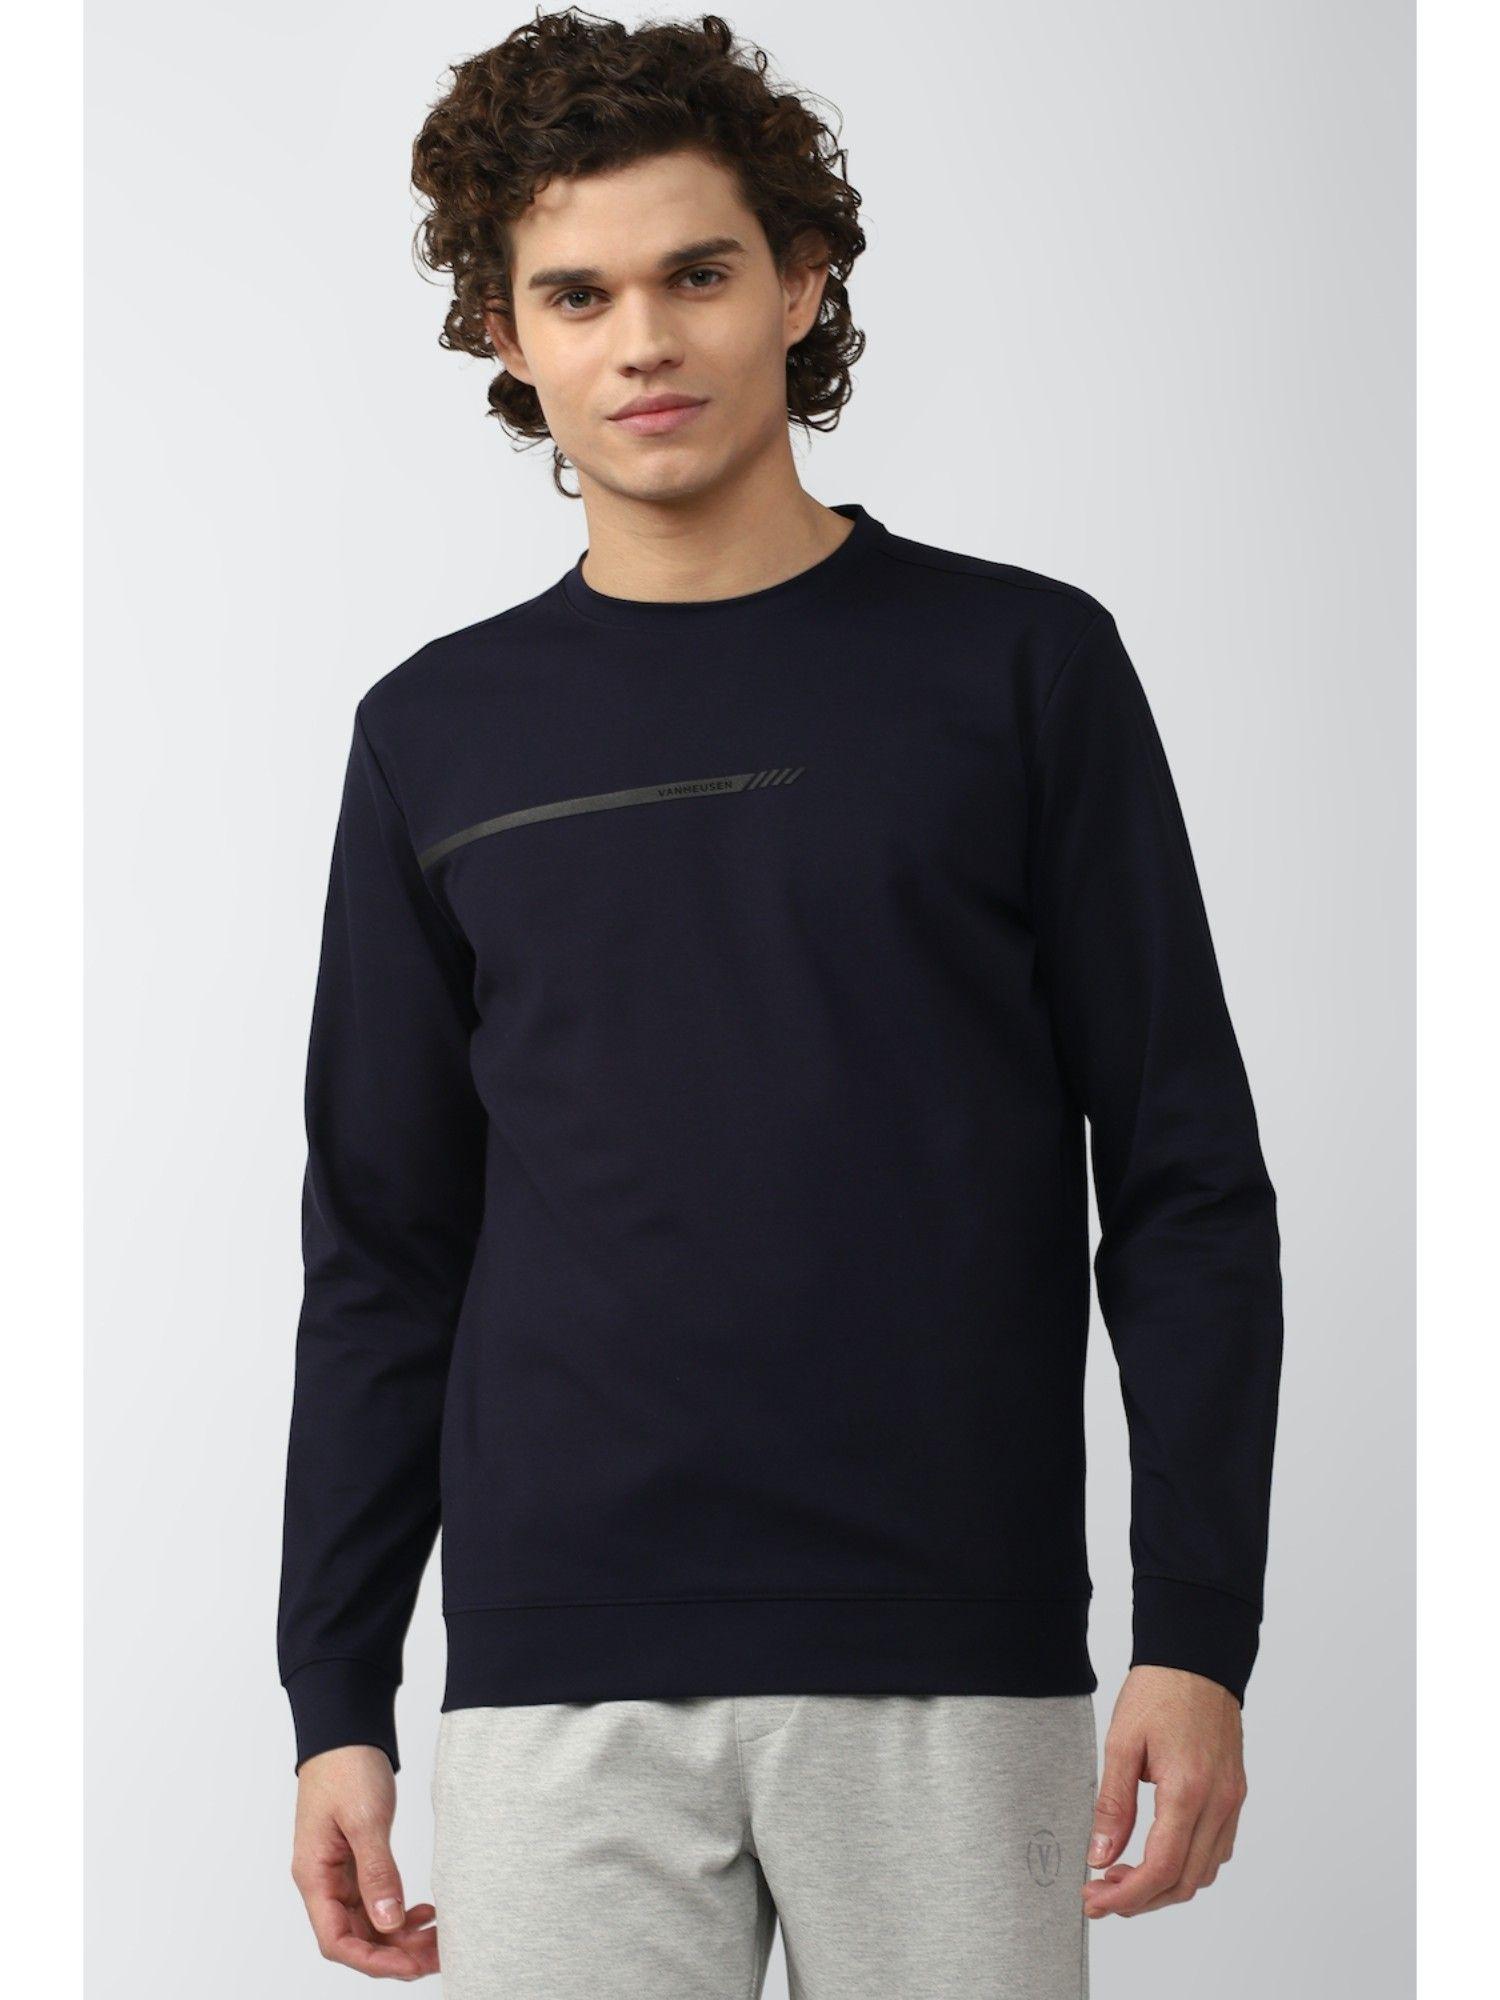 navy-blue-solid-sweatshirt